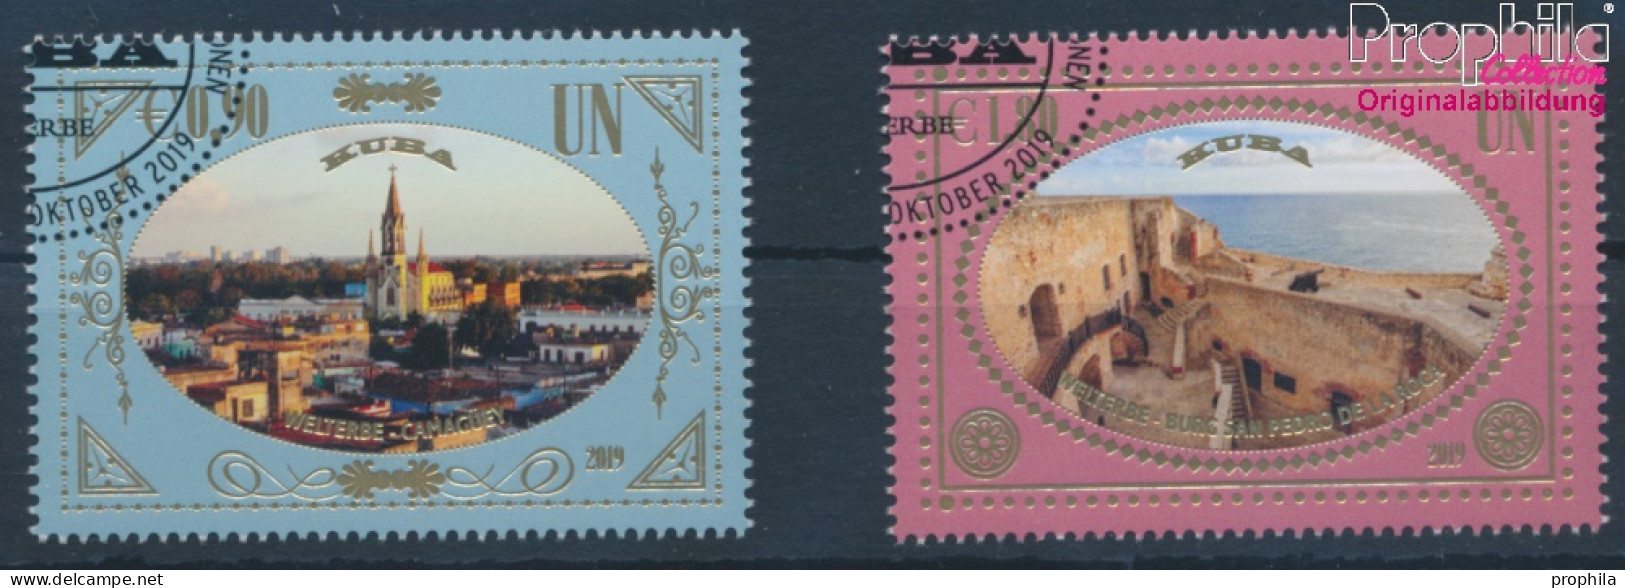 UNO - Wien 1070-1071 (kompl.Ausg.) Gestempelt 2019 UNESCO Welterbe Kuba (10357216 - Gebraucht